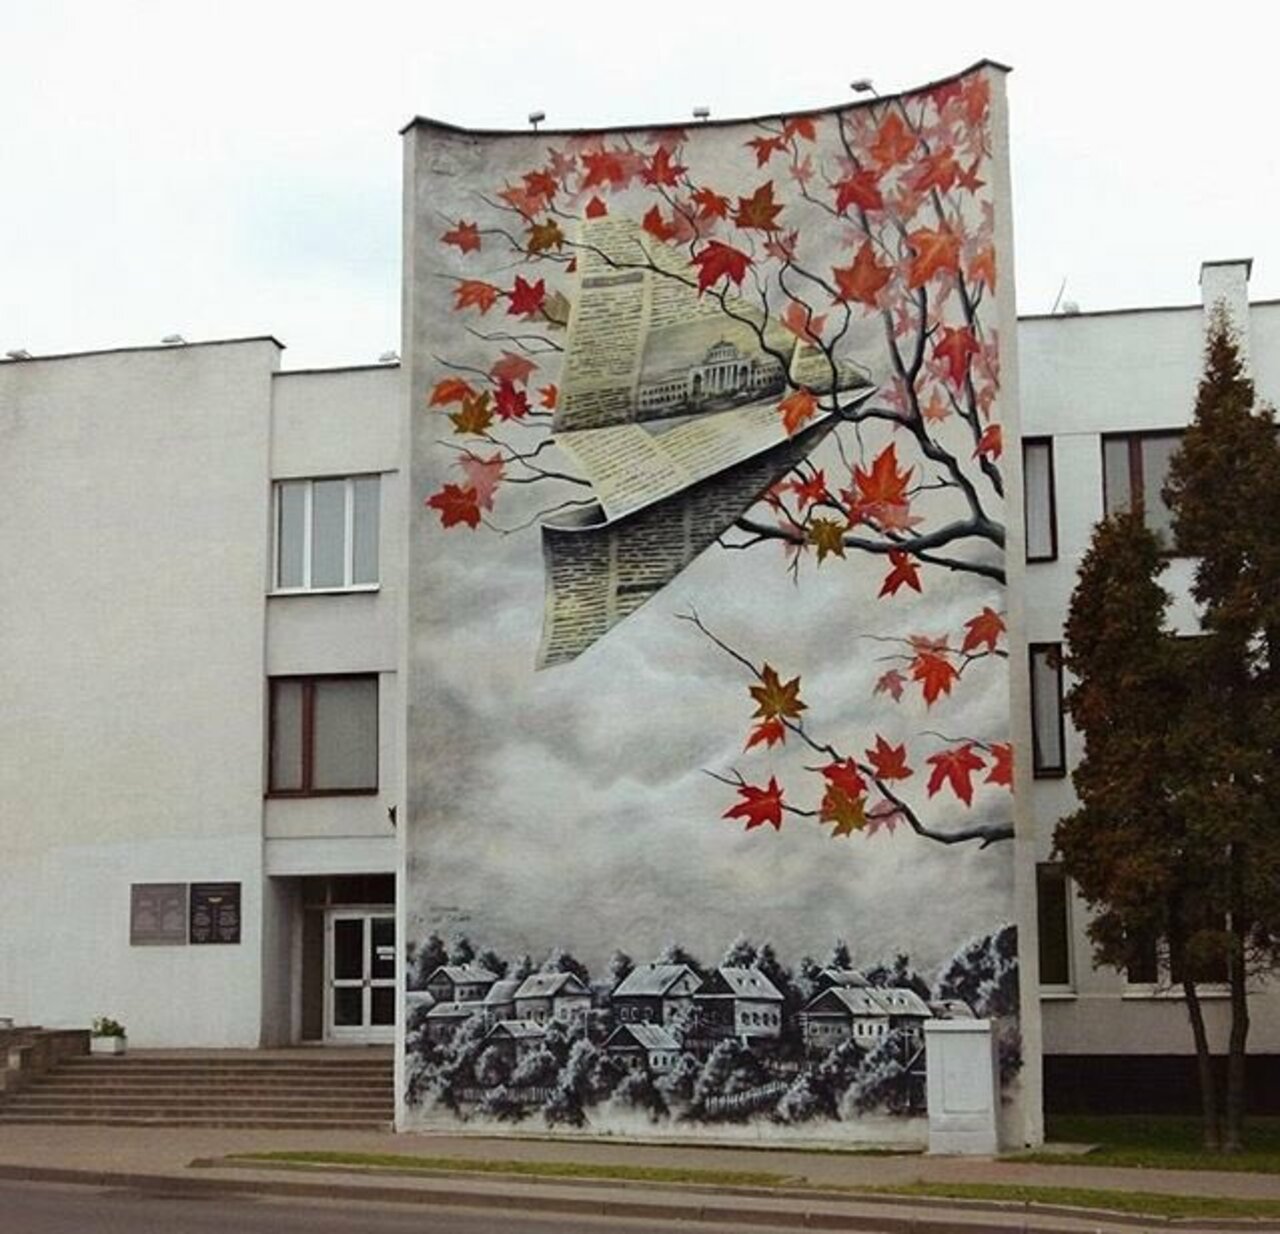 https://goo.gl/t4fpx2 RT GoogleStreetArt: New Street Art by MUTUS in Belarus 

#art #graffiti #mural #streetart https://t.co/fKJFRbWmtF